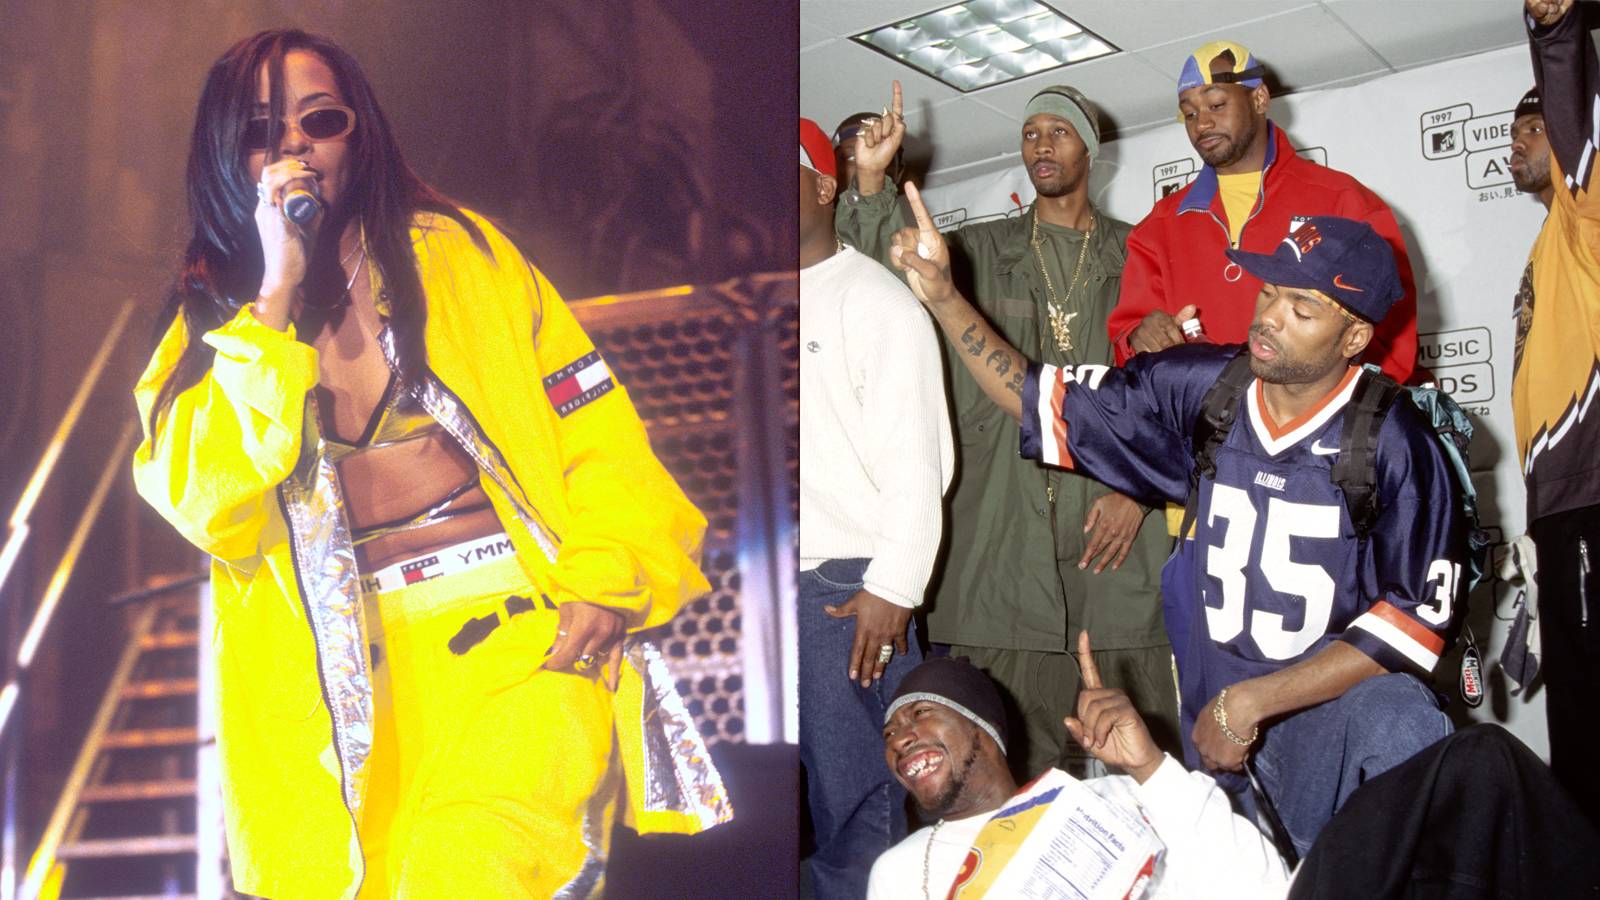 Mid '90s Hip-Hop Fashion